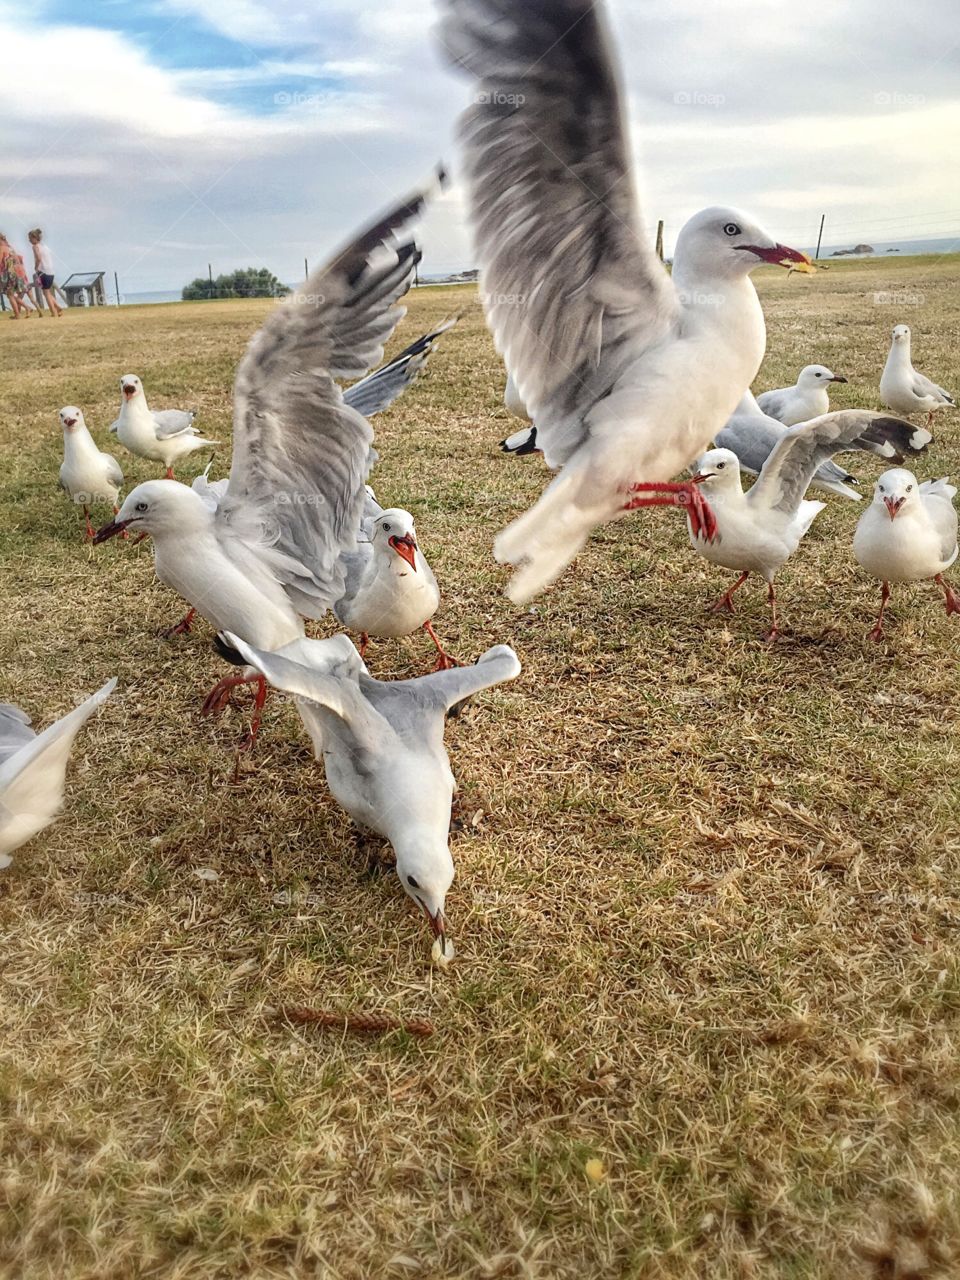 Feeding the birds, Australia 